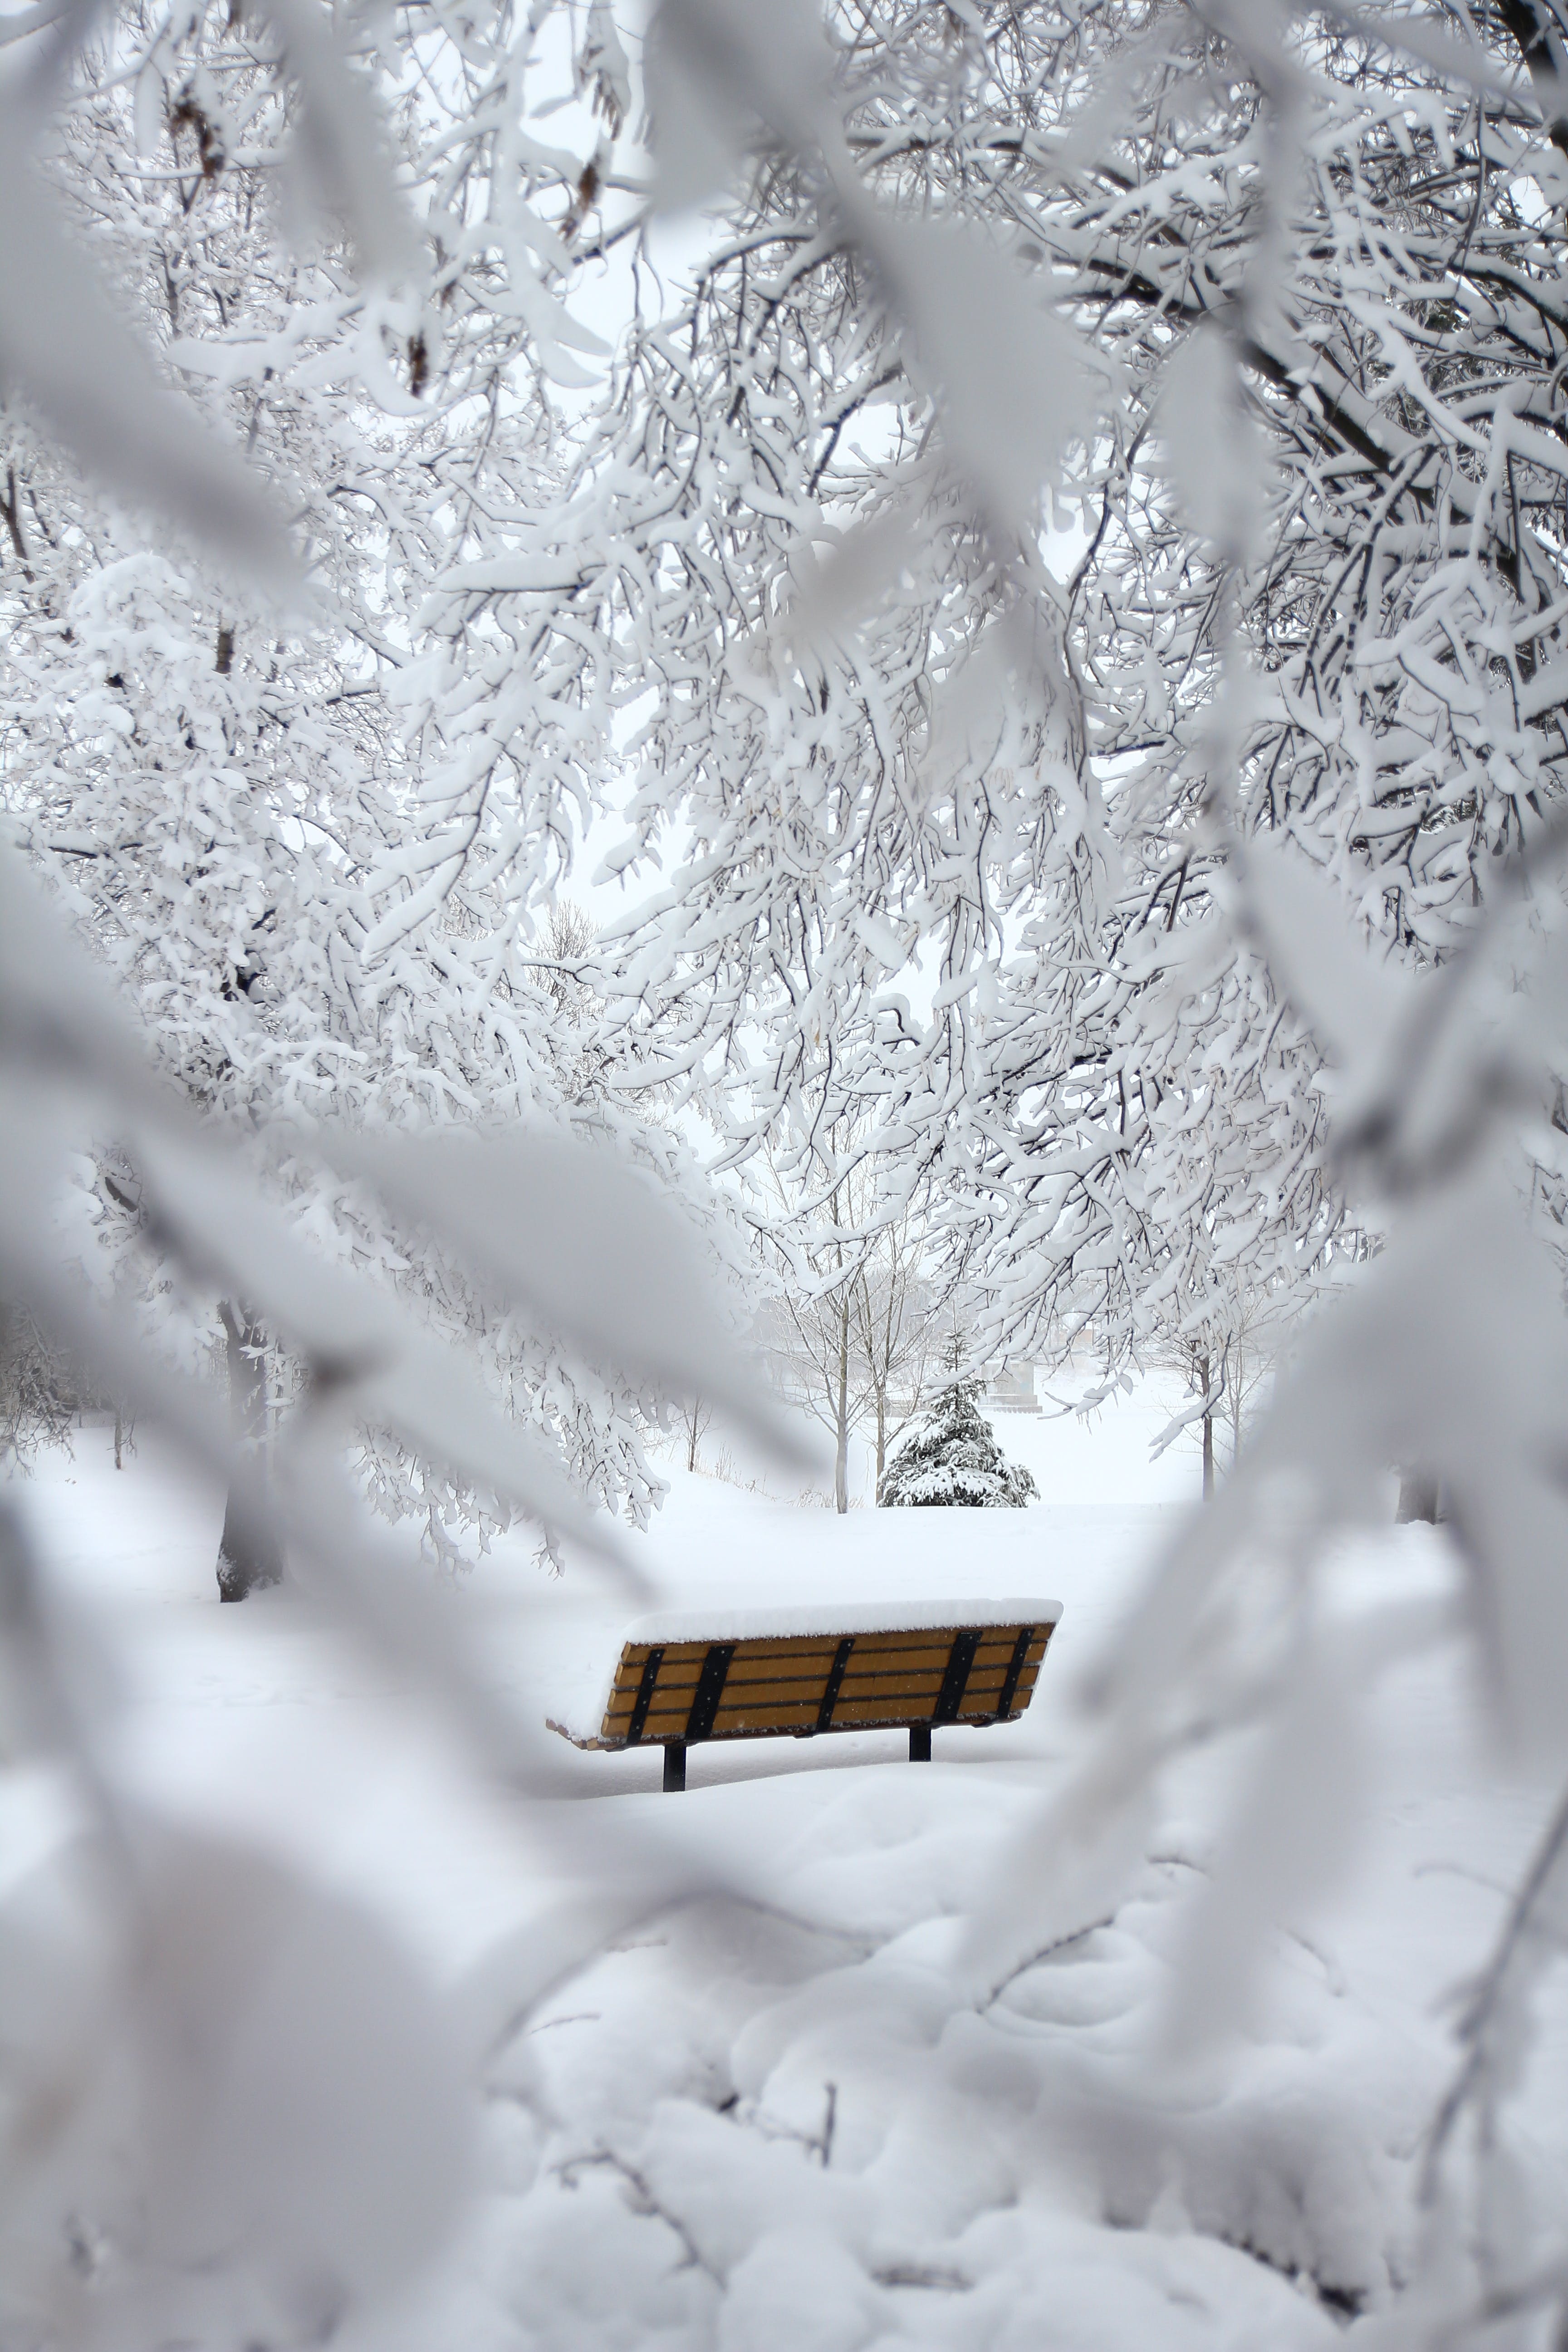 Brown outdoor bench in the snow | Source: Pexels